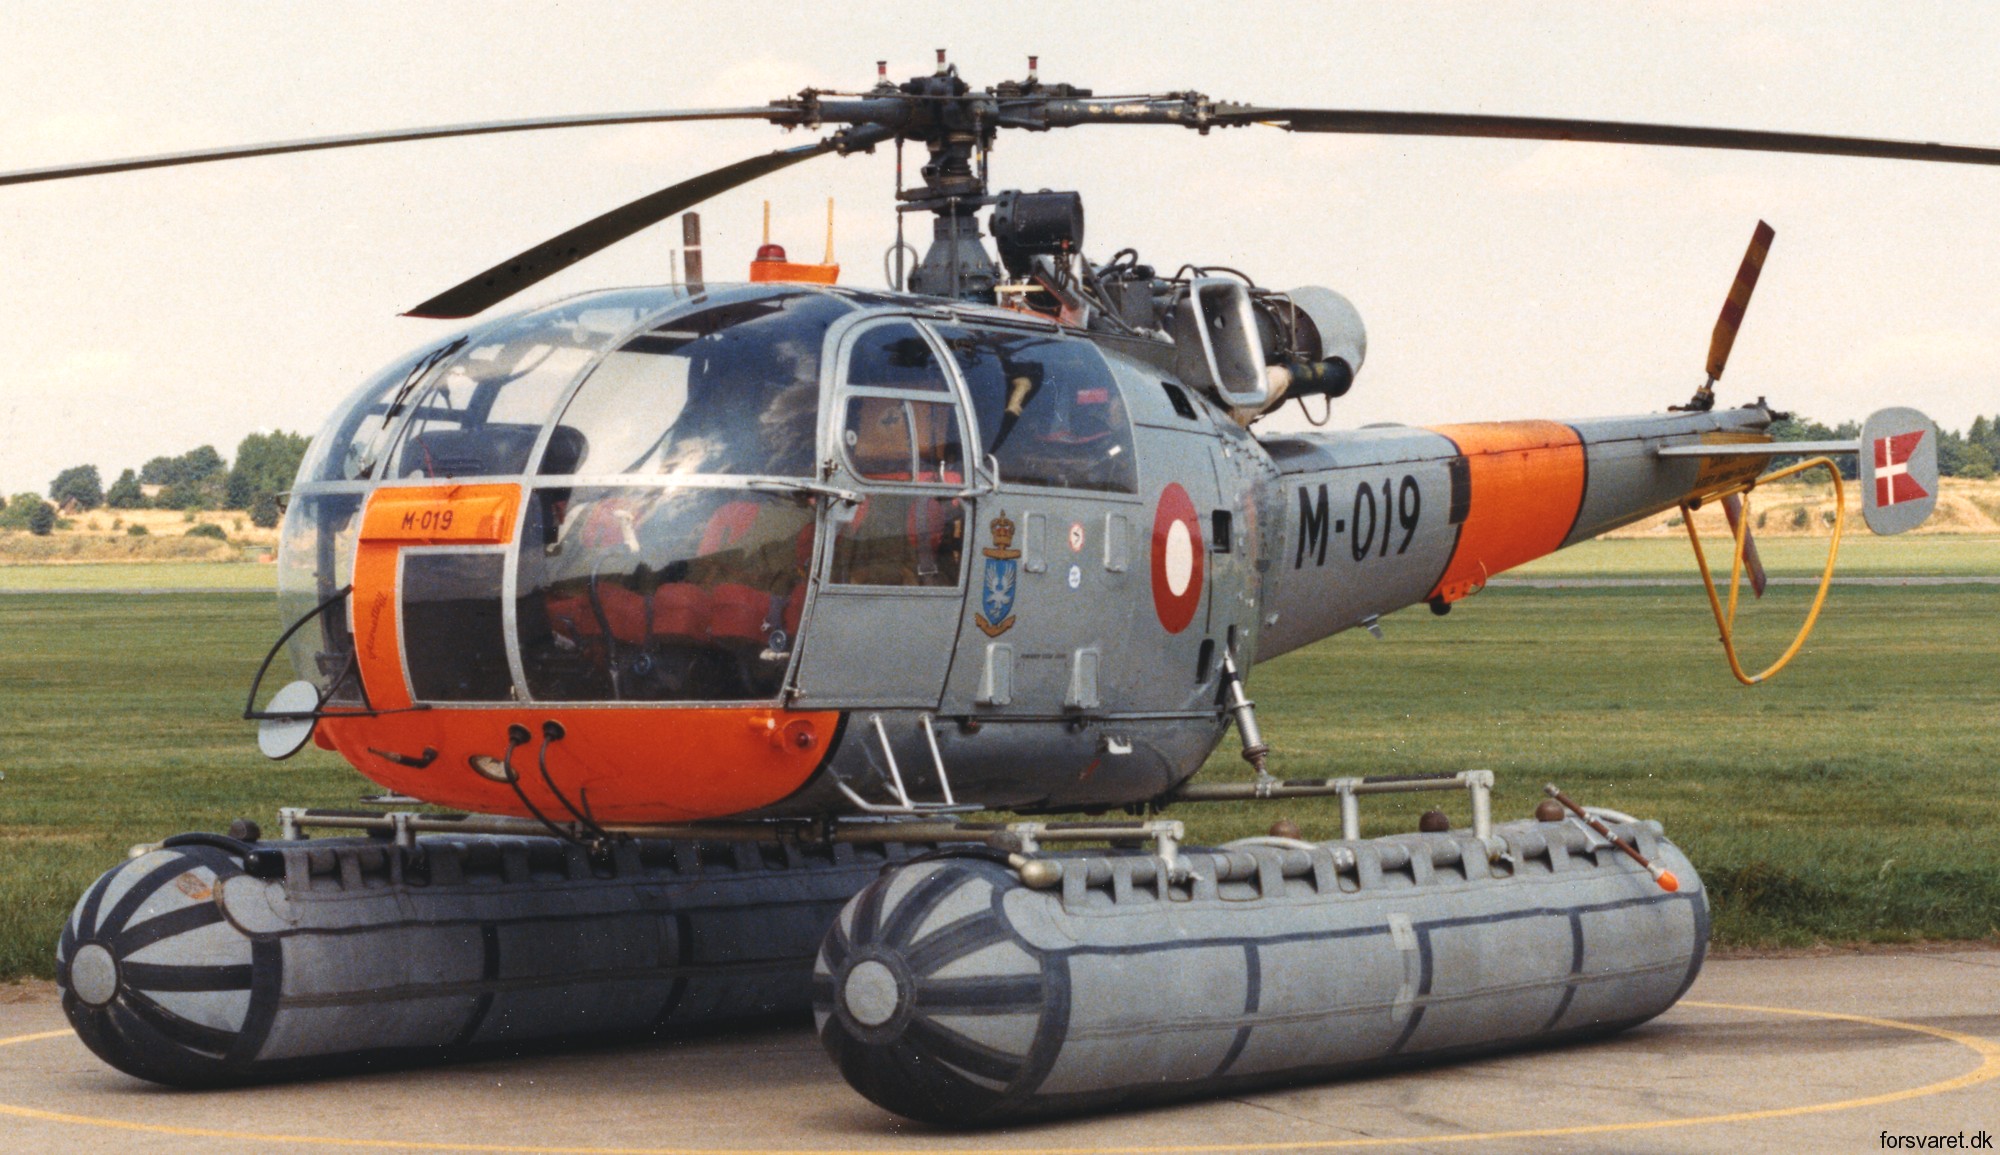 sa 316b alouette iii helicopter royal danish navy søværnet kongelige danske marine sud aviation m-019 10